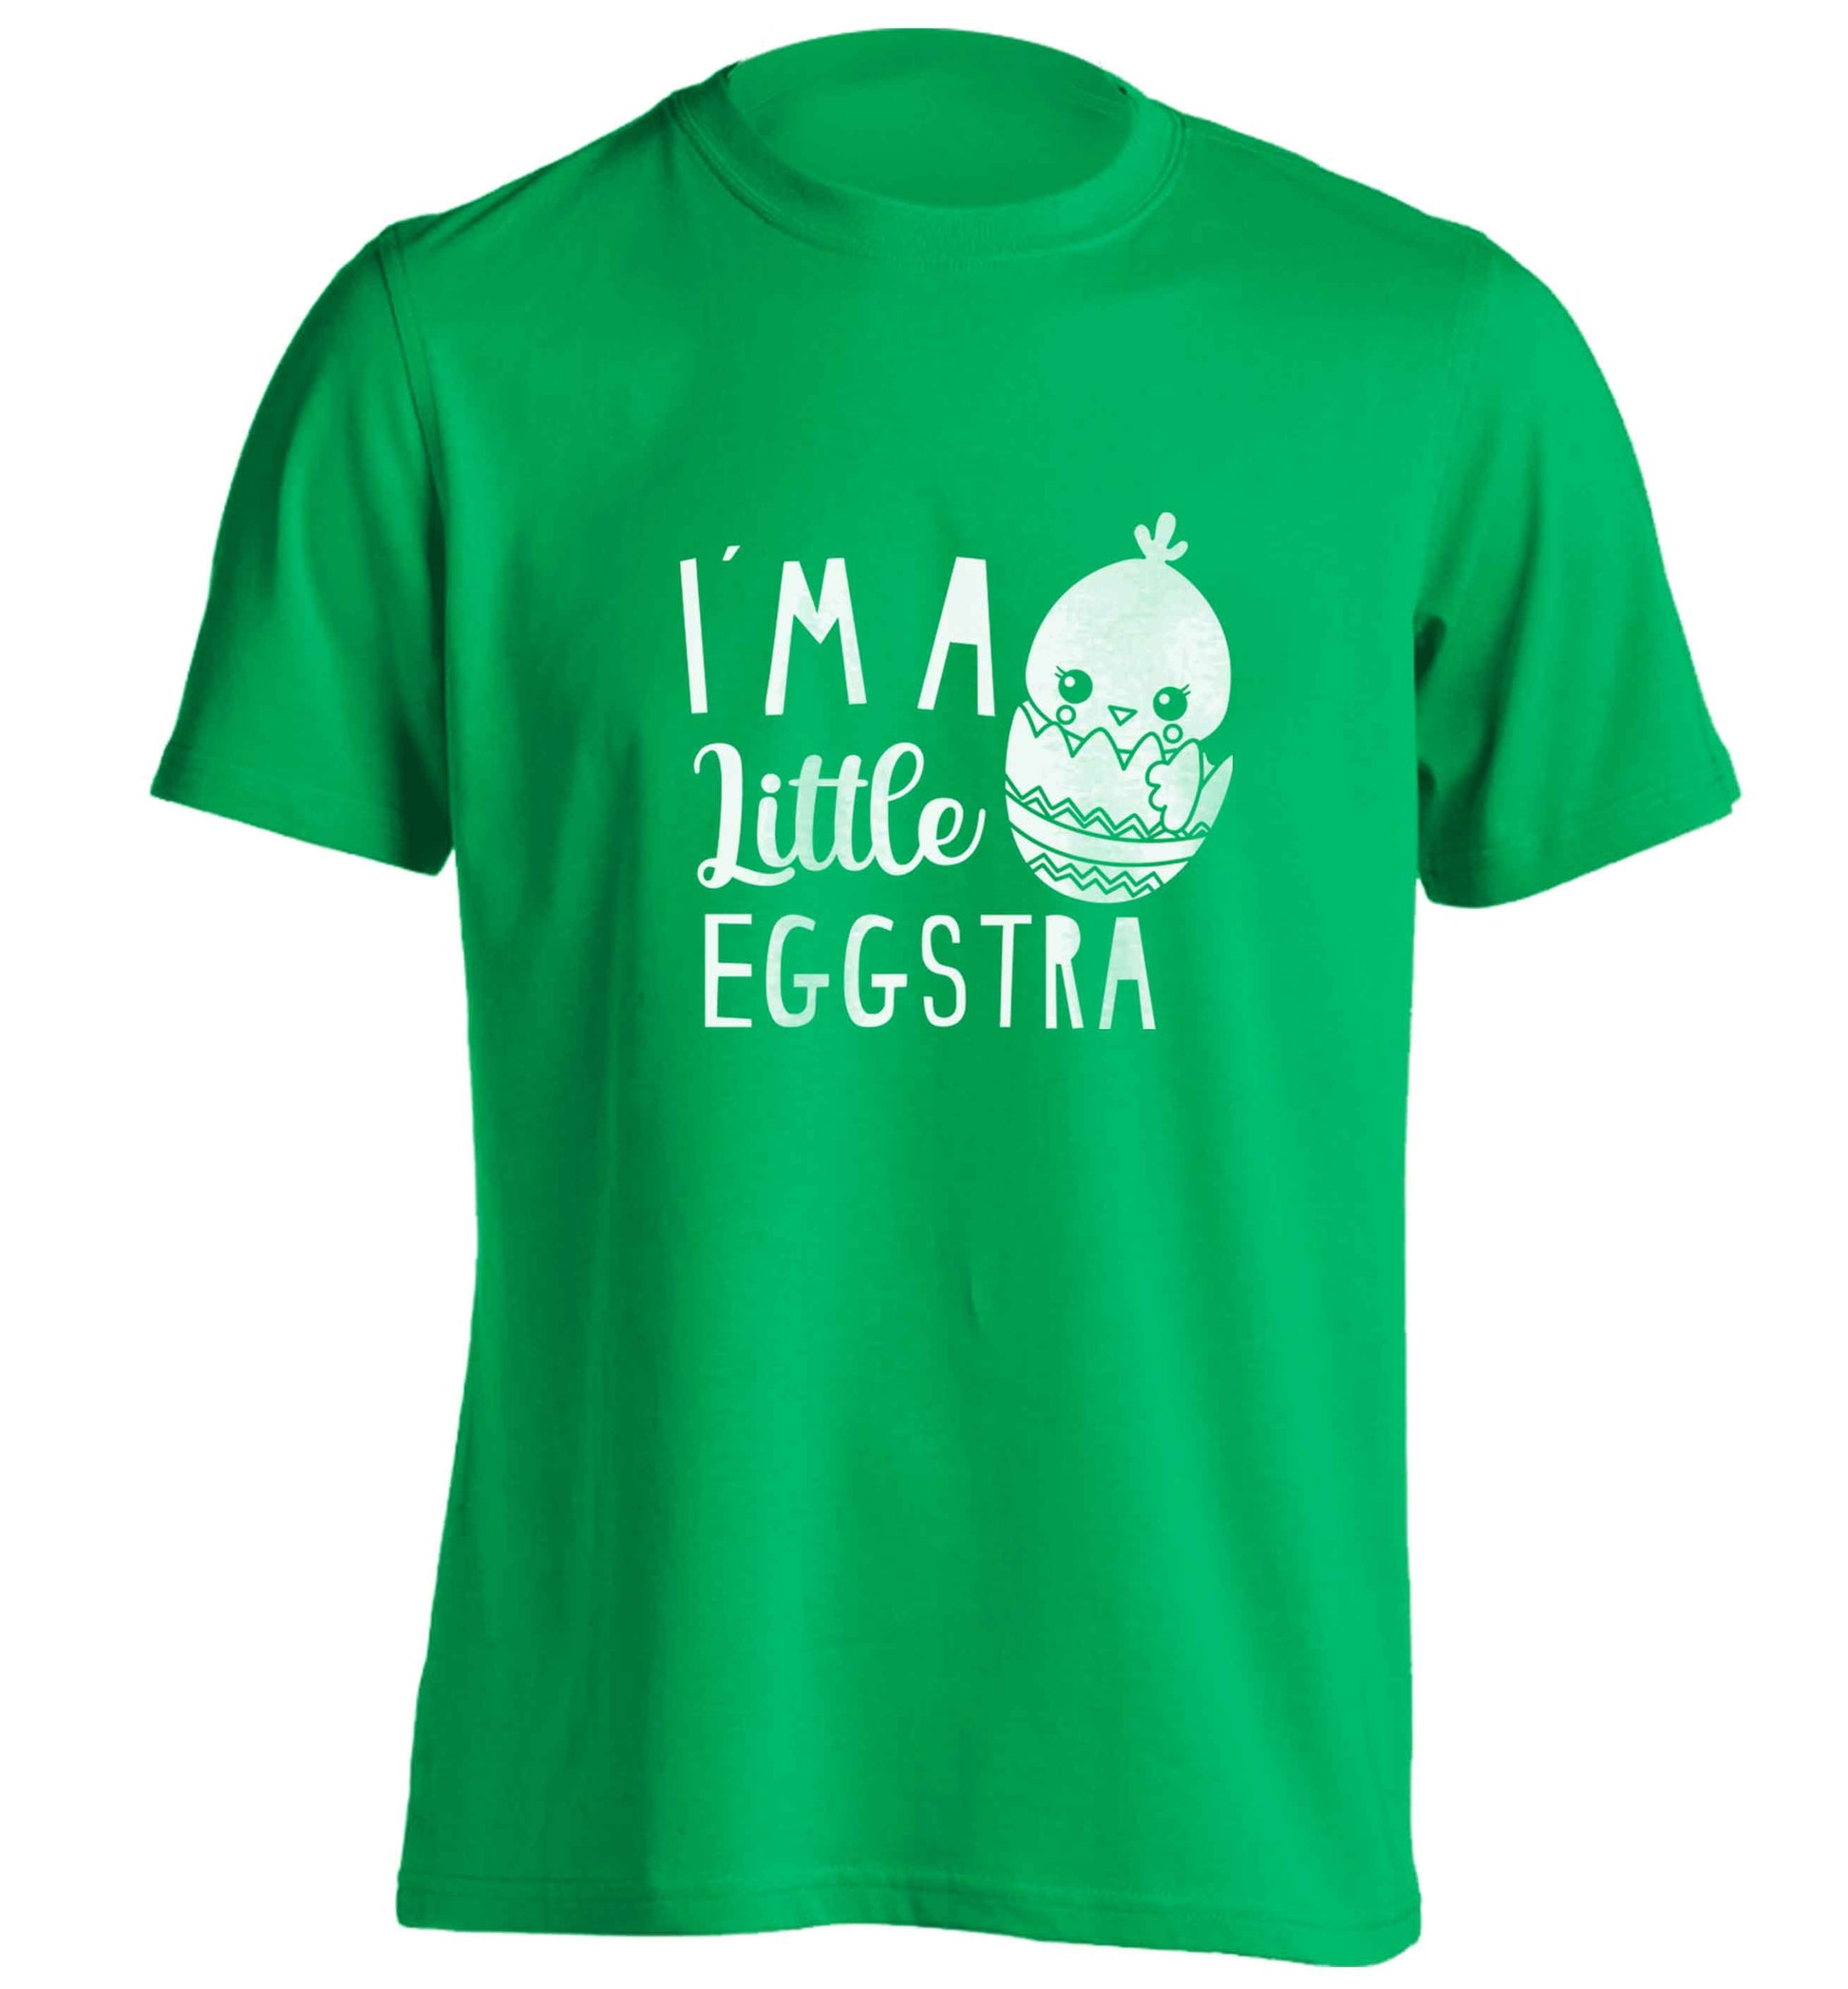 I'm a little eggstra adults unisex green Tshirt 2XL